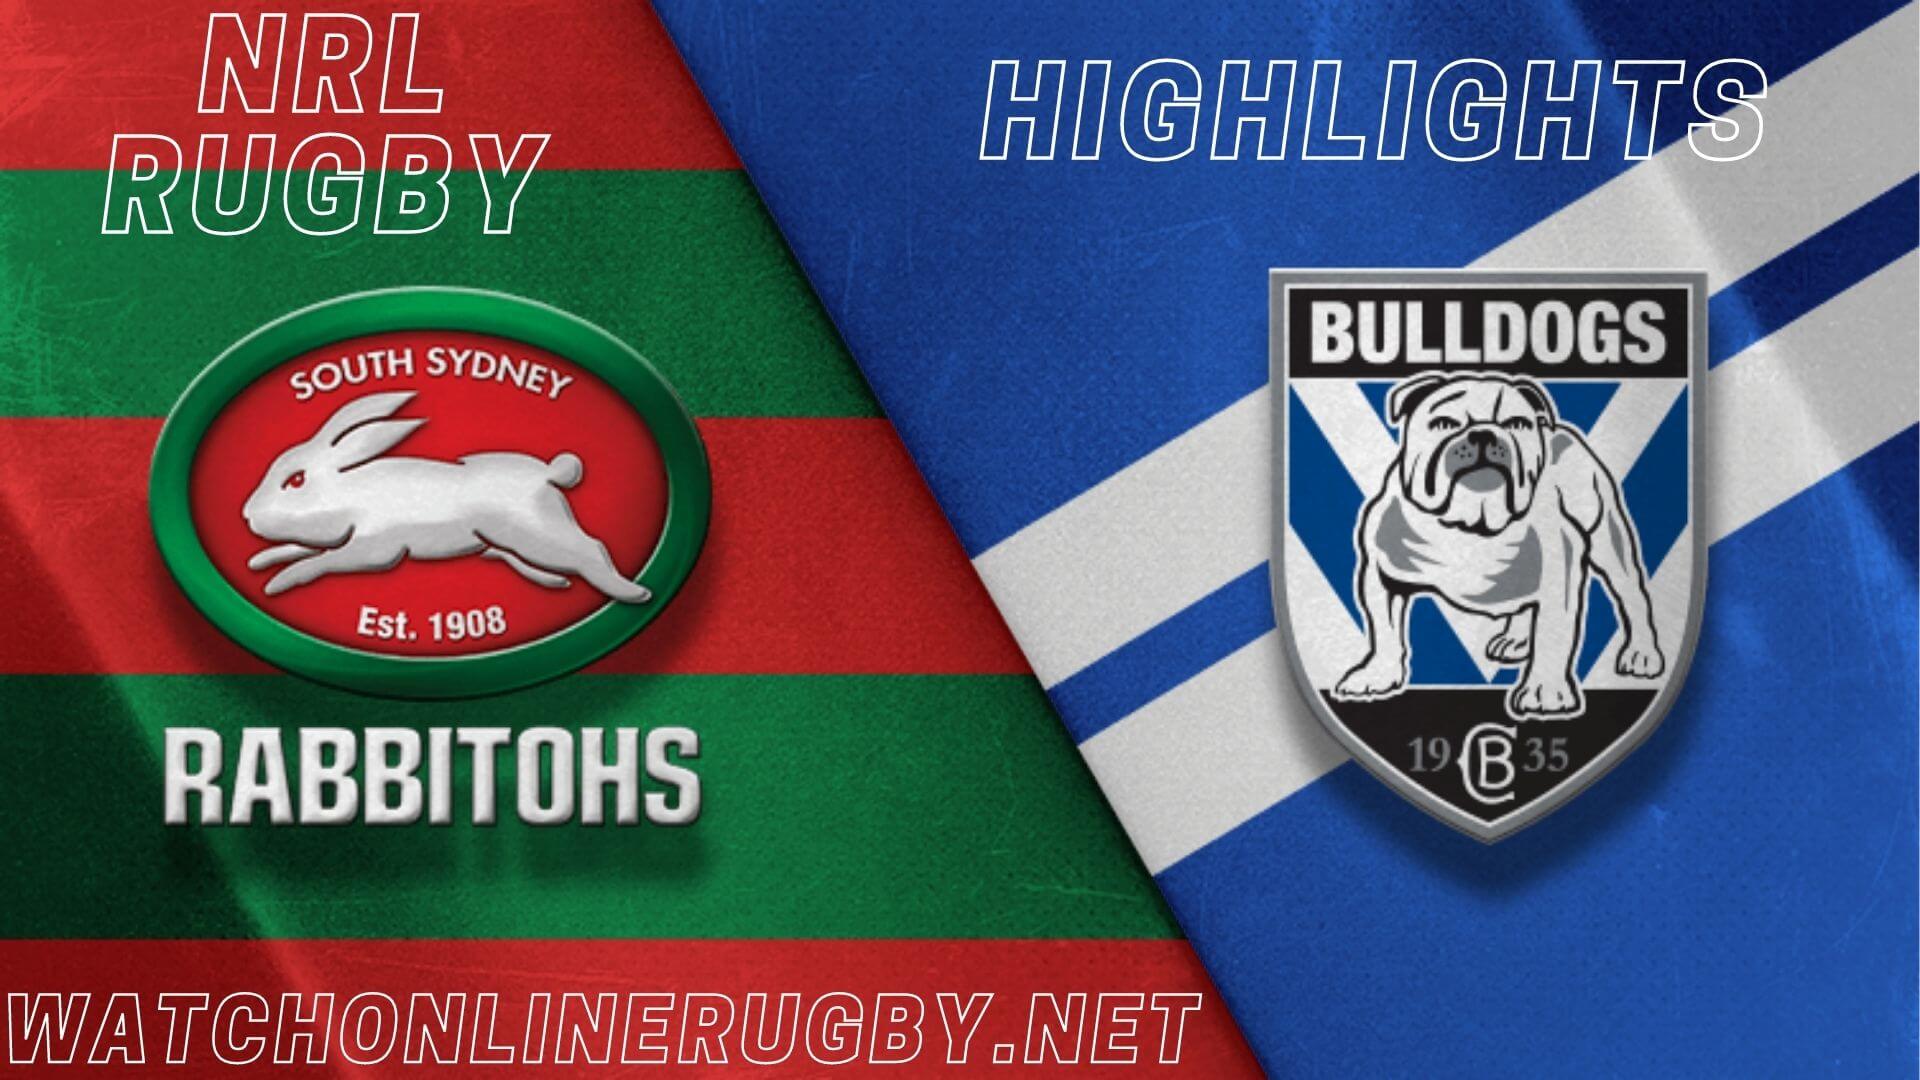 Rabbitohs Vs Bulldogs Highlights RD 6 NRL Rugby